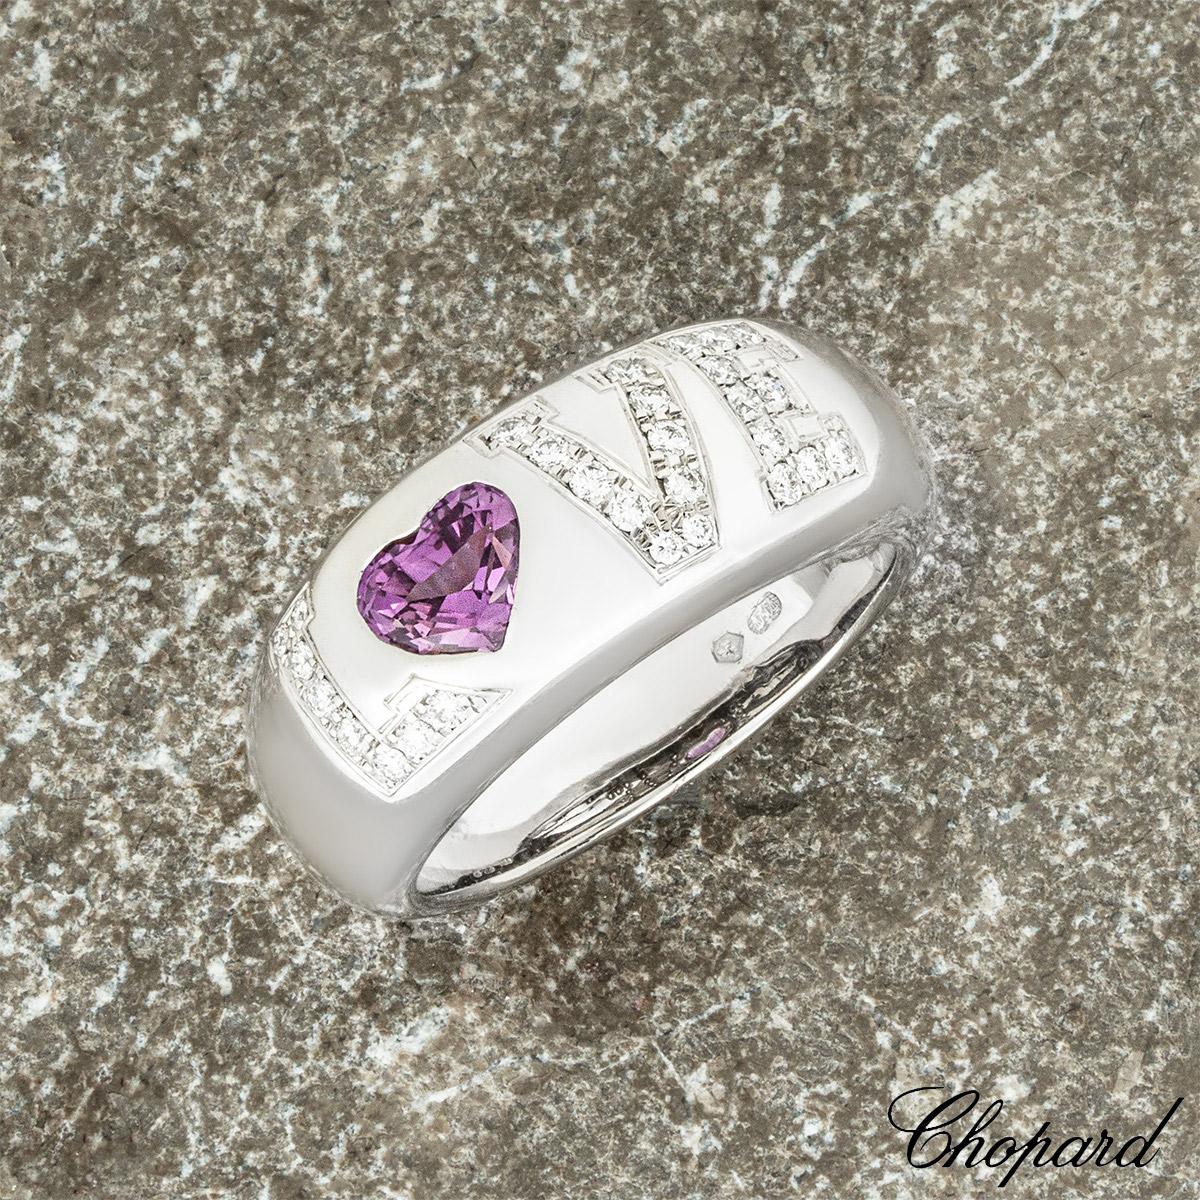 Chopard White Gold Pink Sapphire & Diamond Love Ring 82/2000-11 3